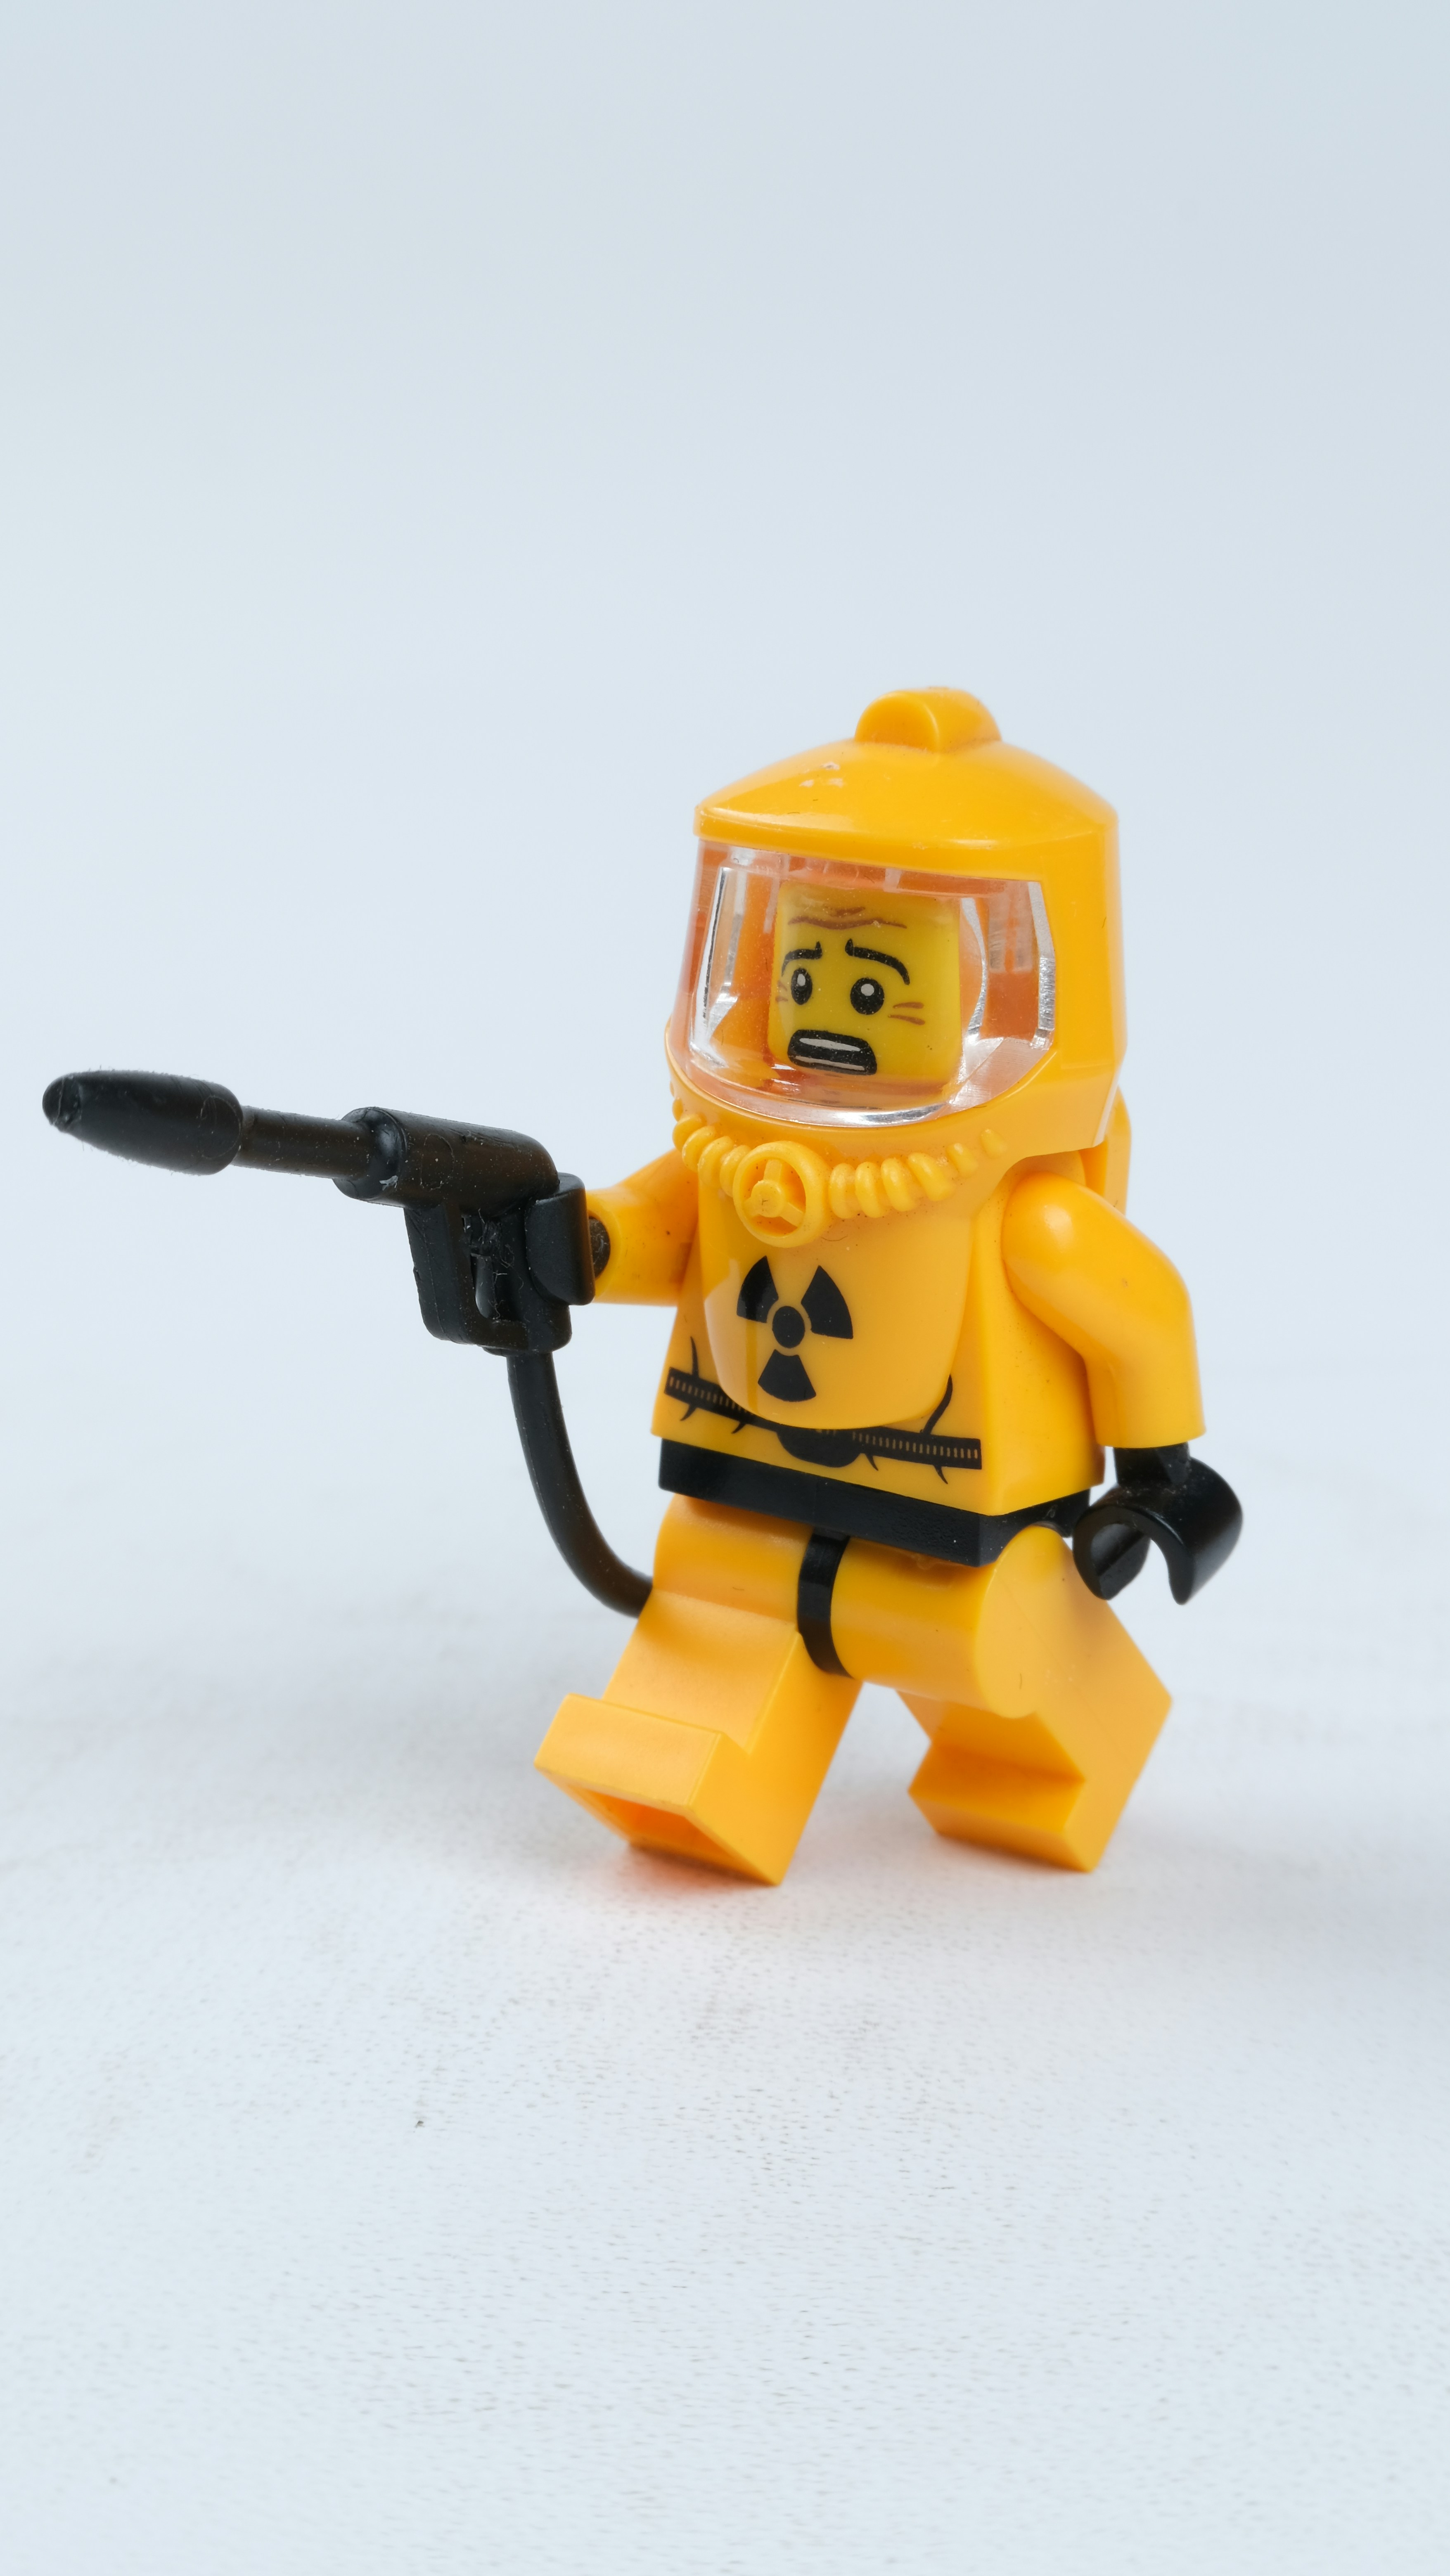 Lego Chernobyl People with anti radiation suit or hazmat suit